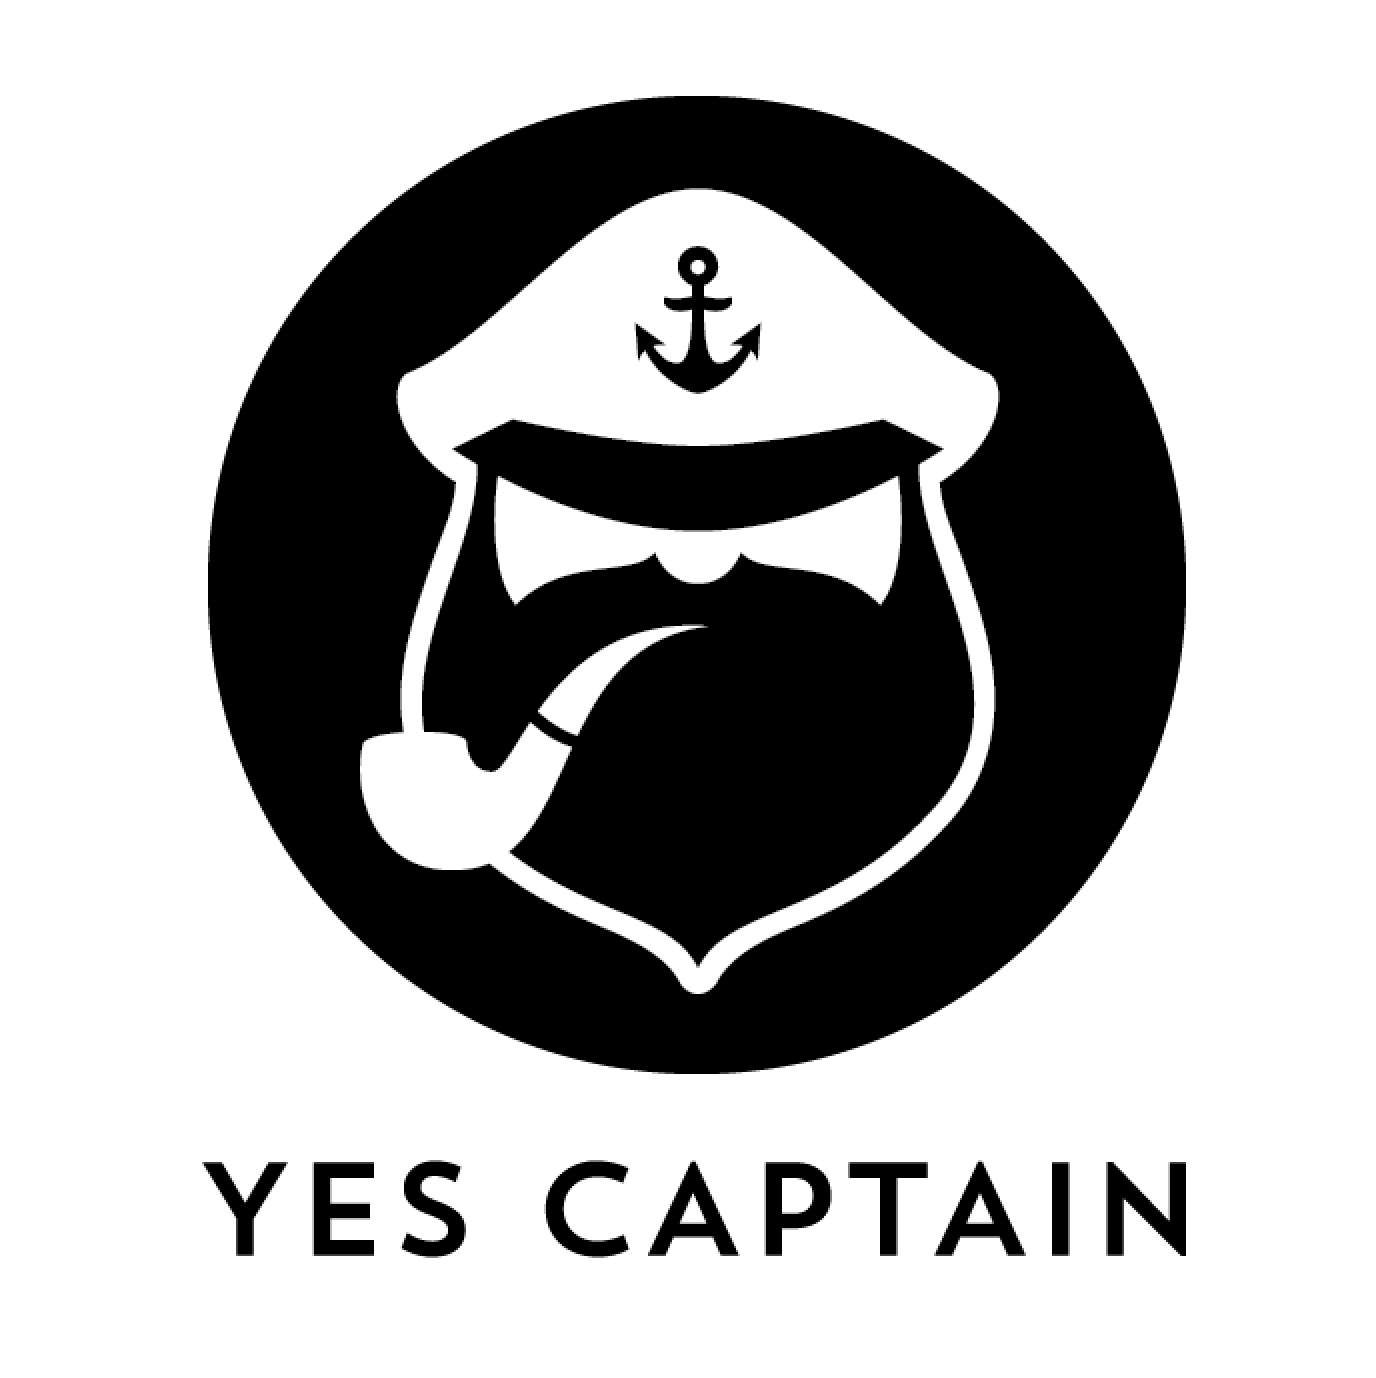 Yes Captain logo